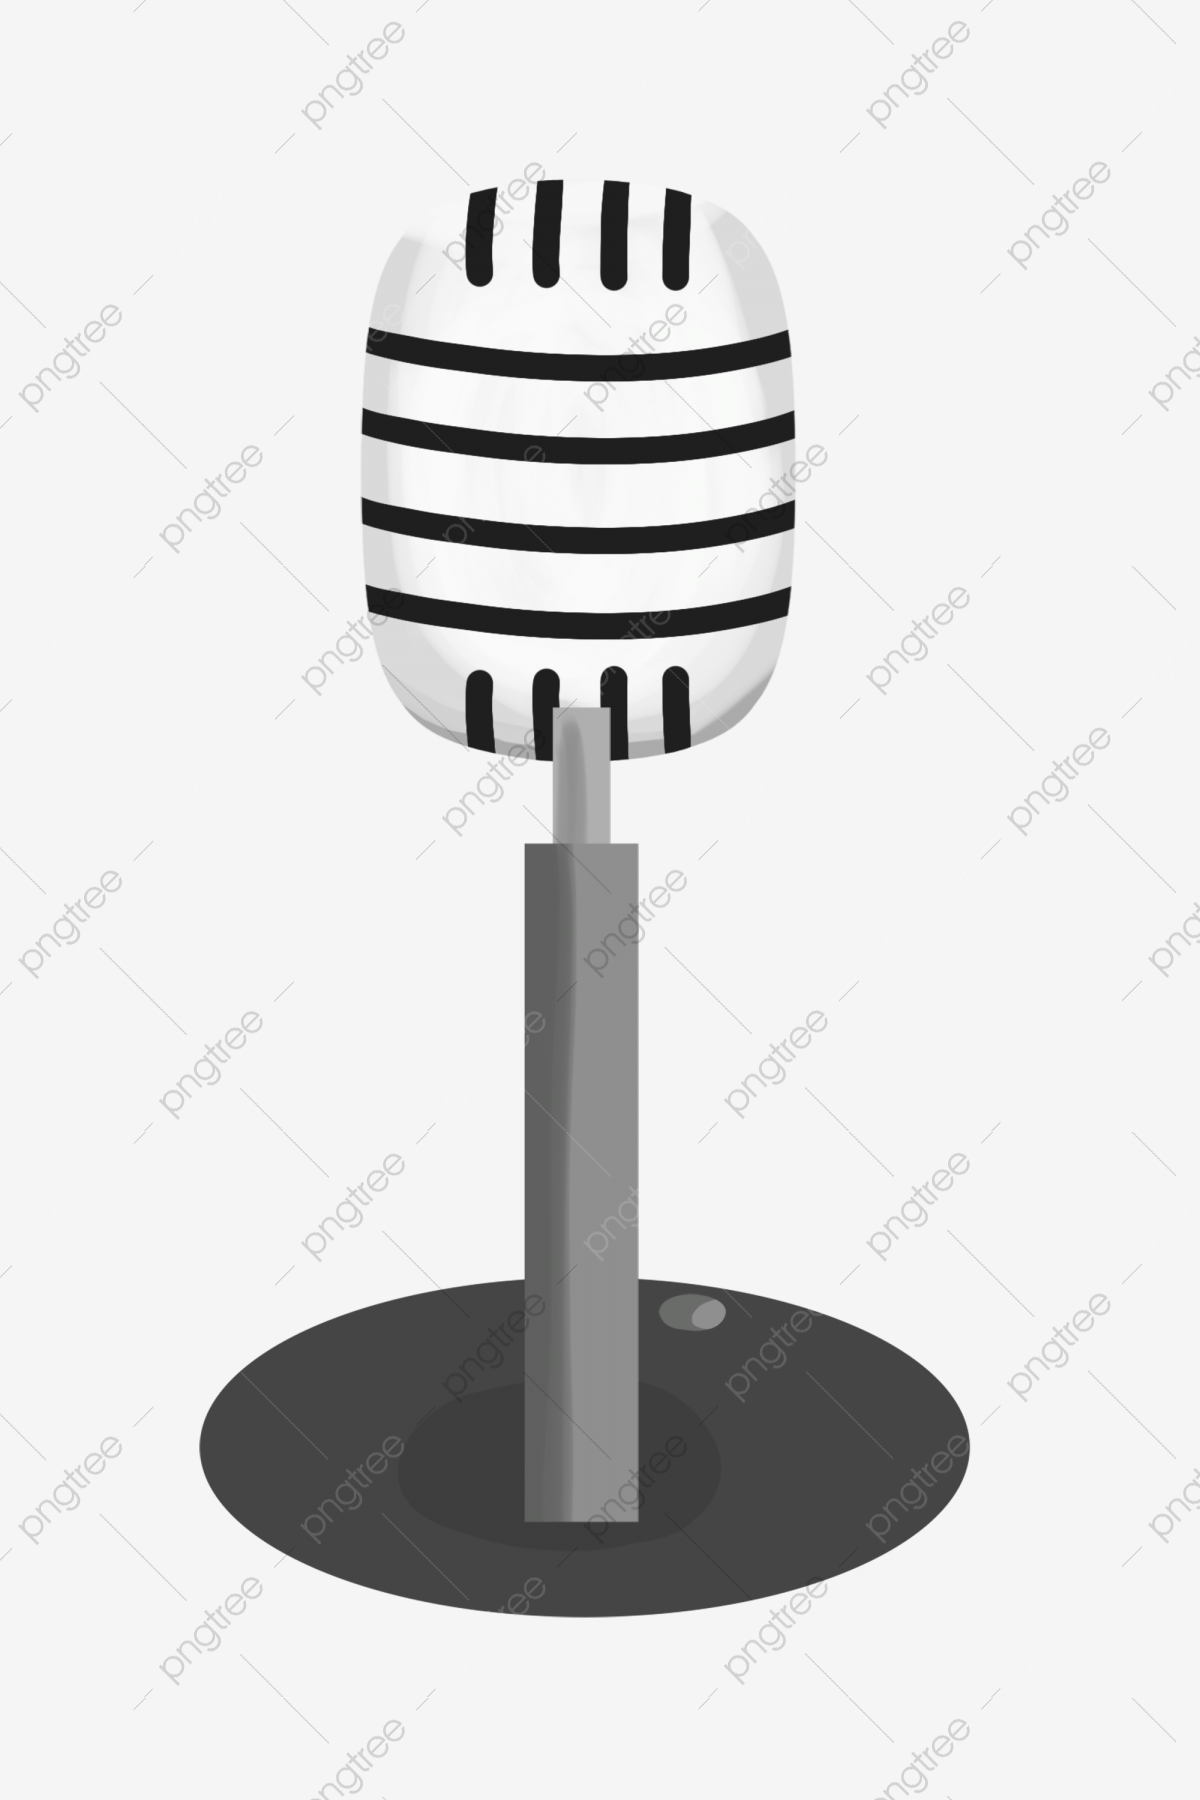 microphone clipart micrphone